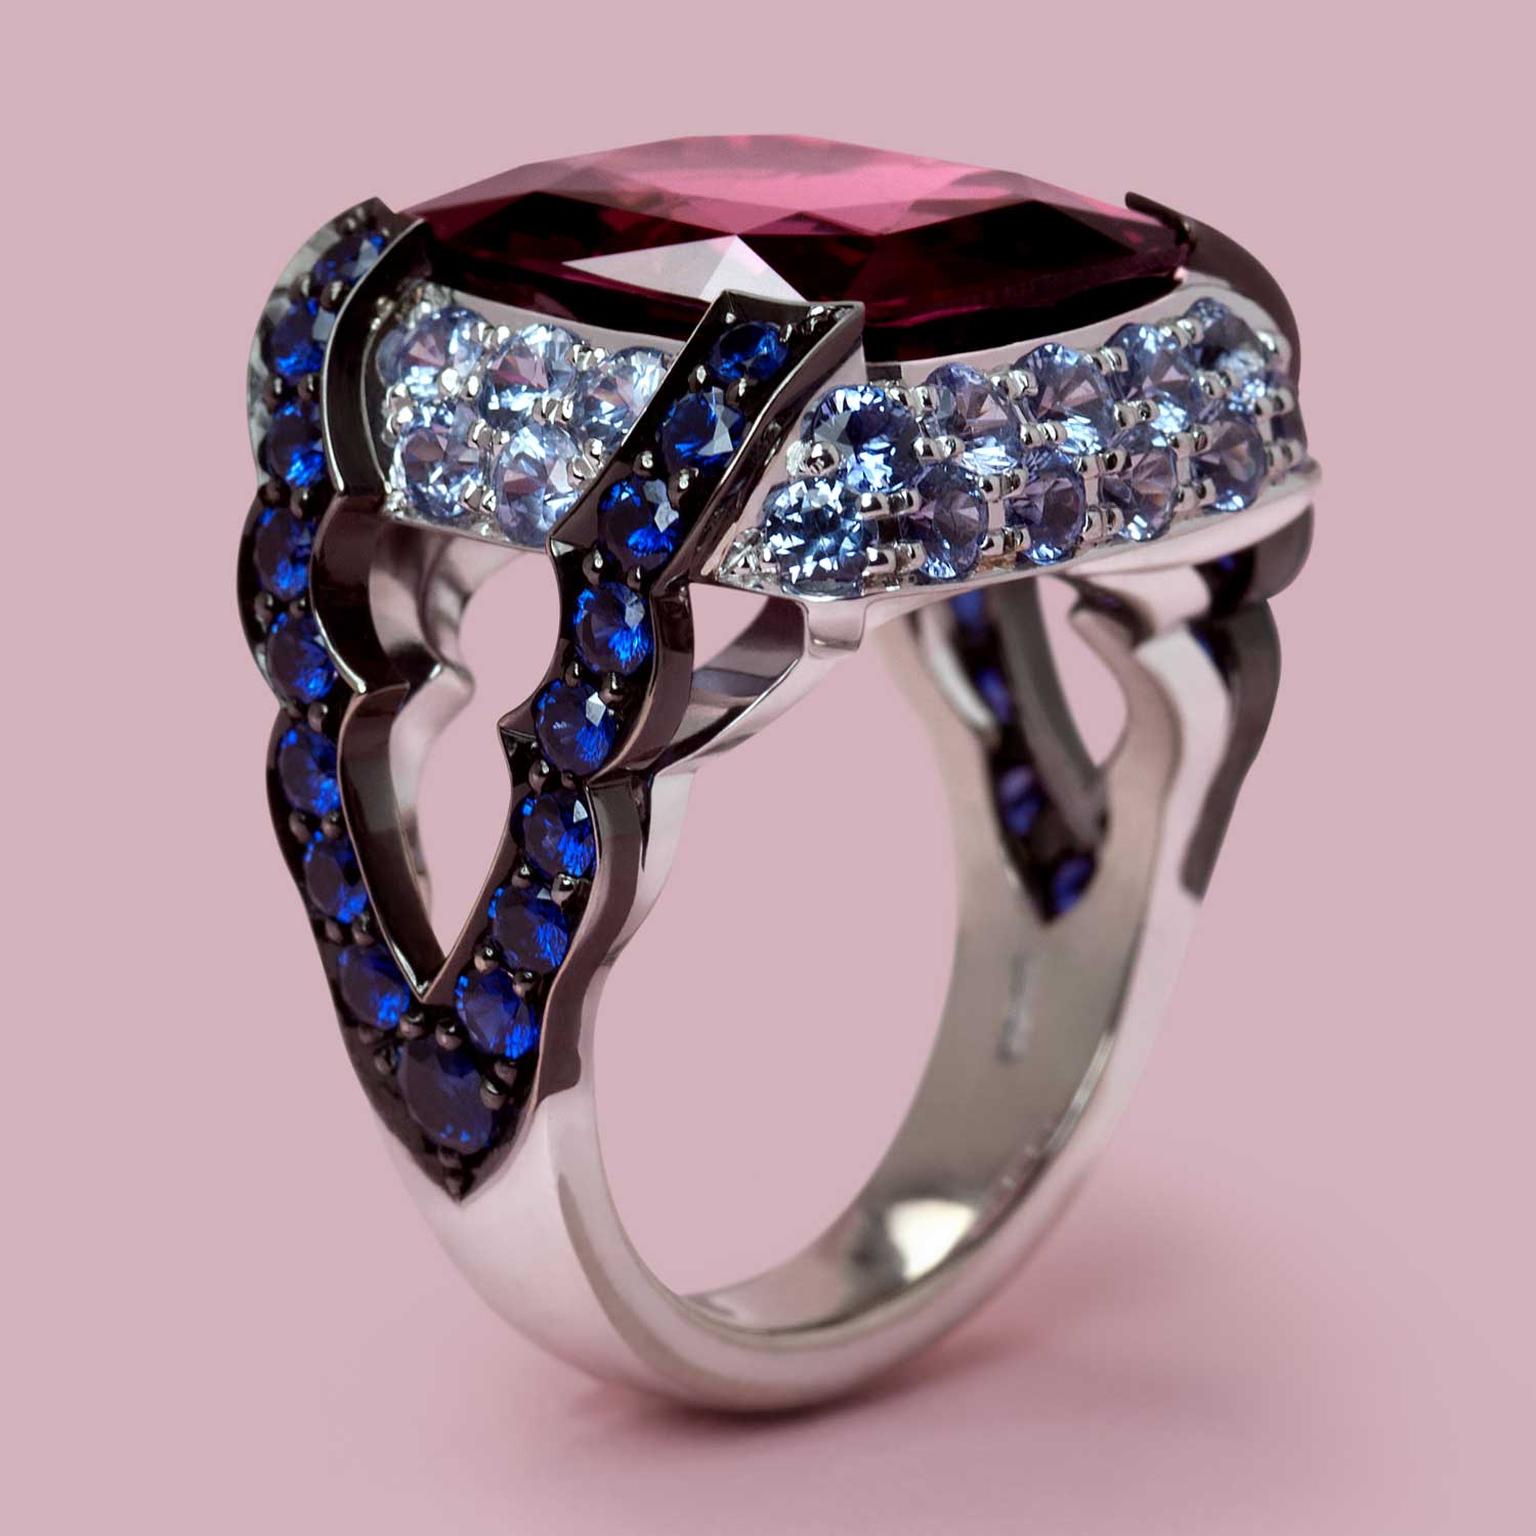 Ming Lampson Violet rhodolite ring